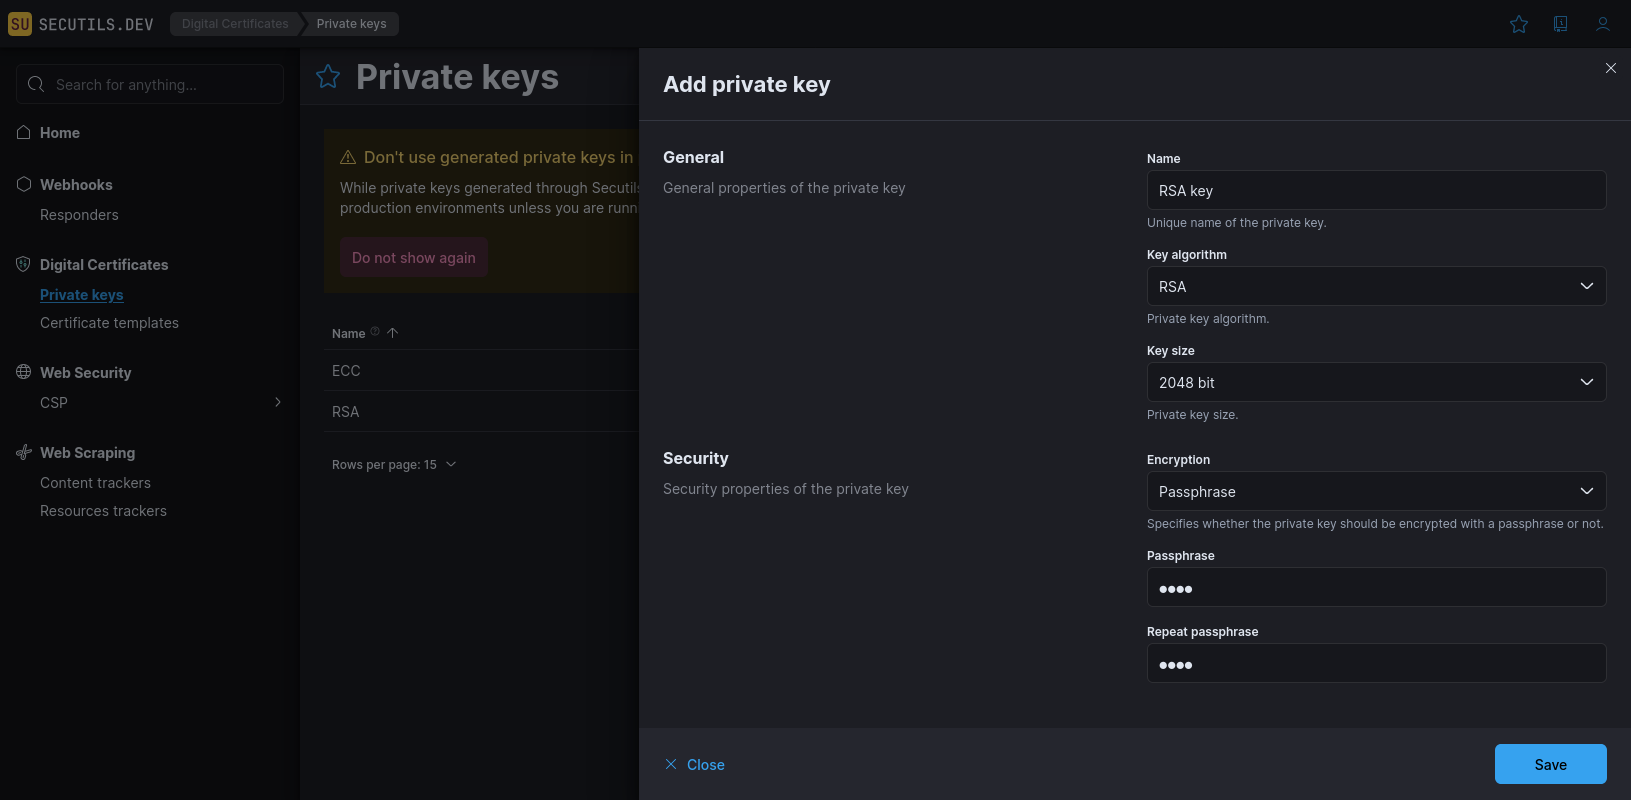 Secutils.dev UI - Private keys